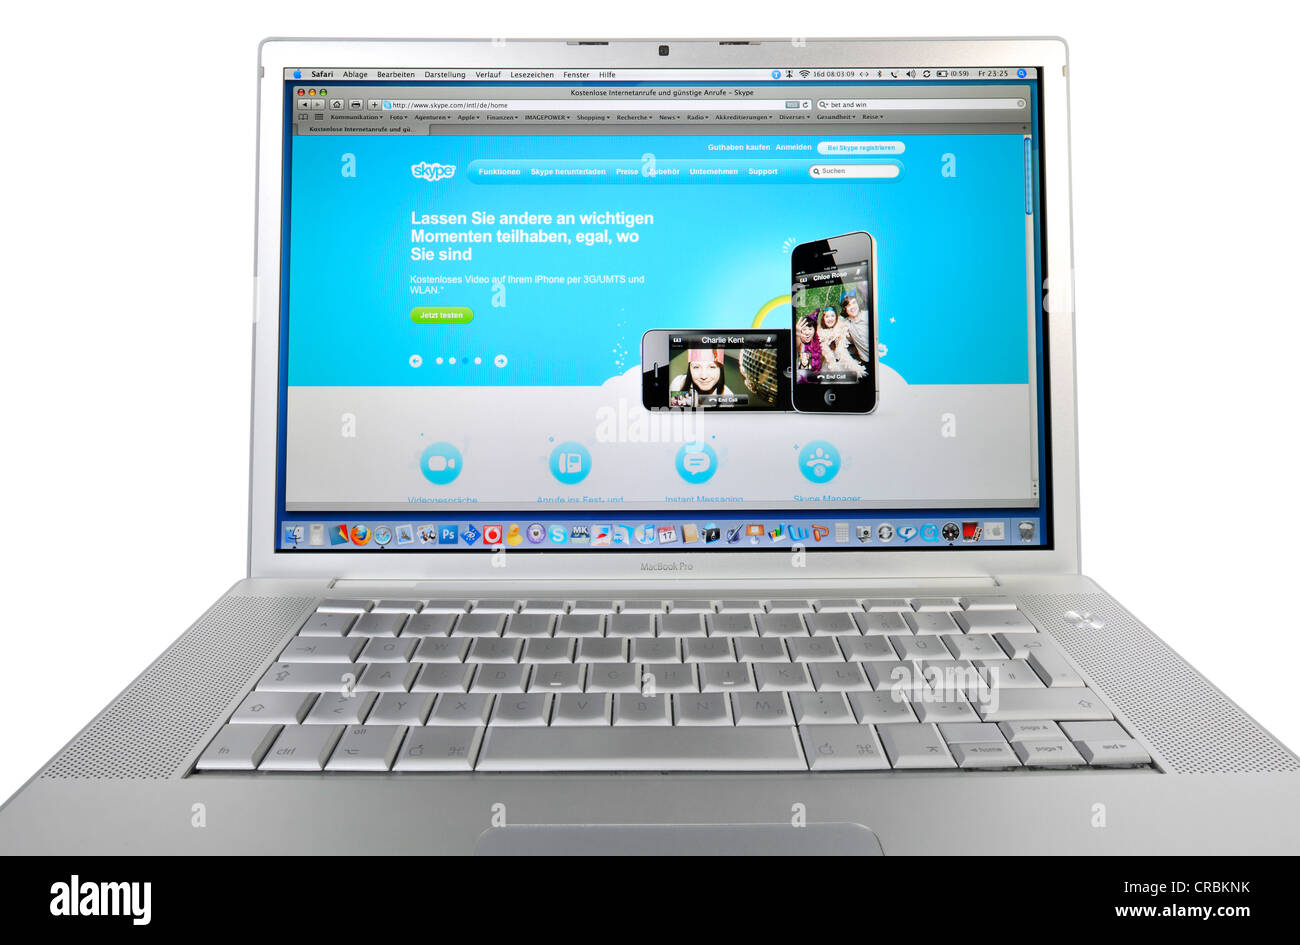 Skype, internet based communication platform, networking portal, displayed on an Apple MacBook Pro Stock Photo